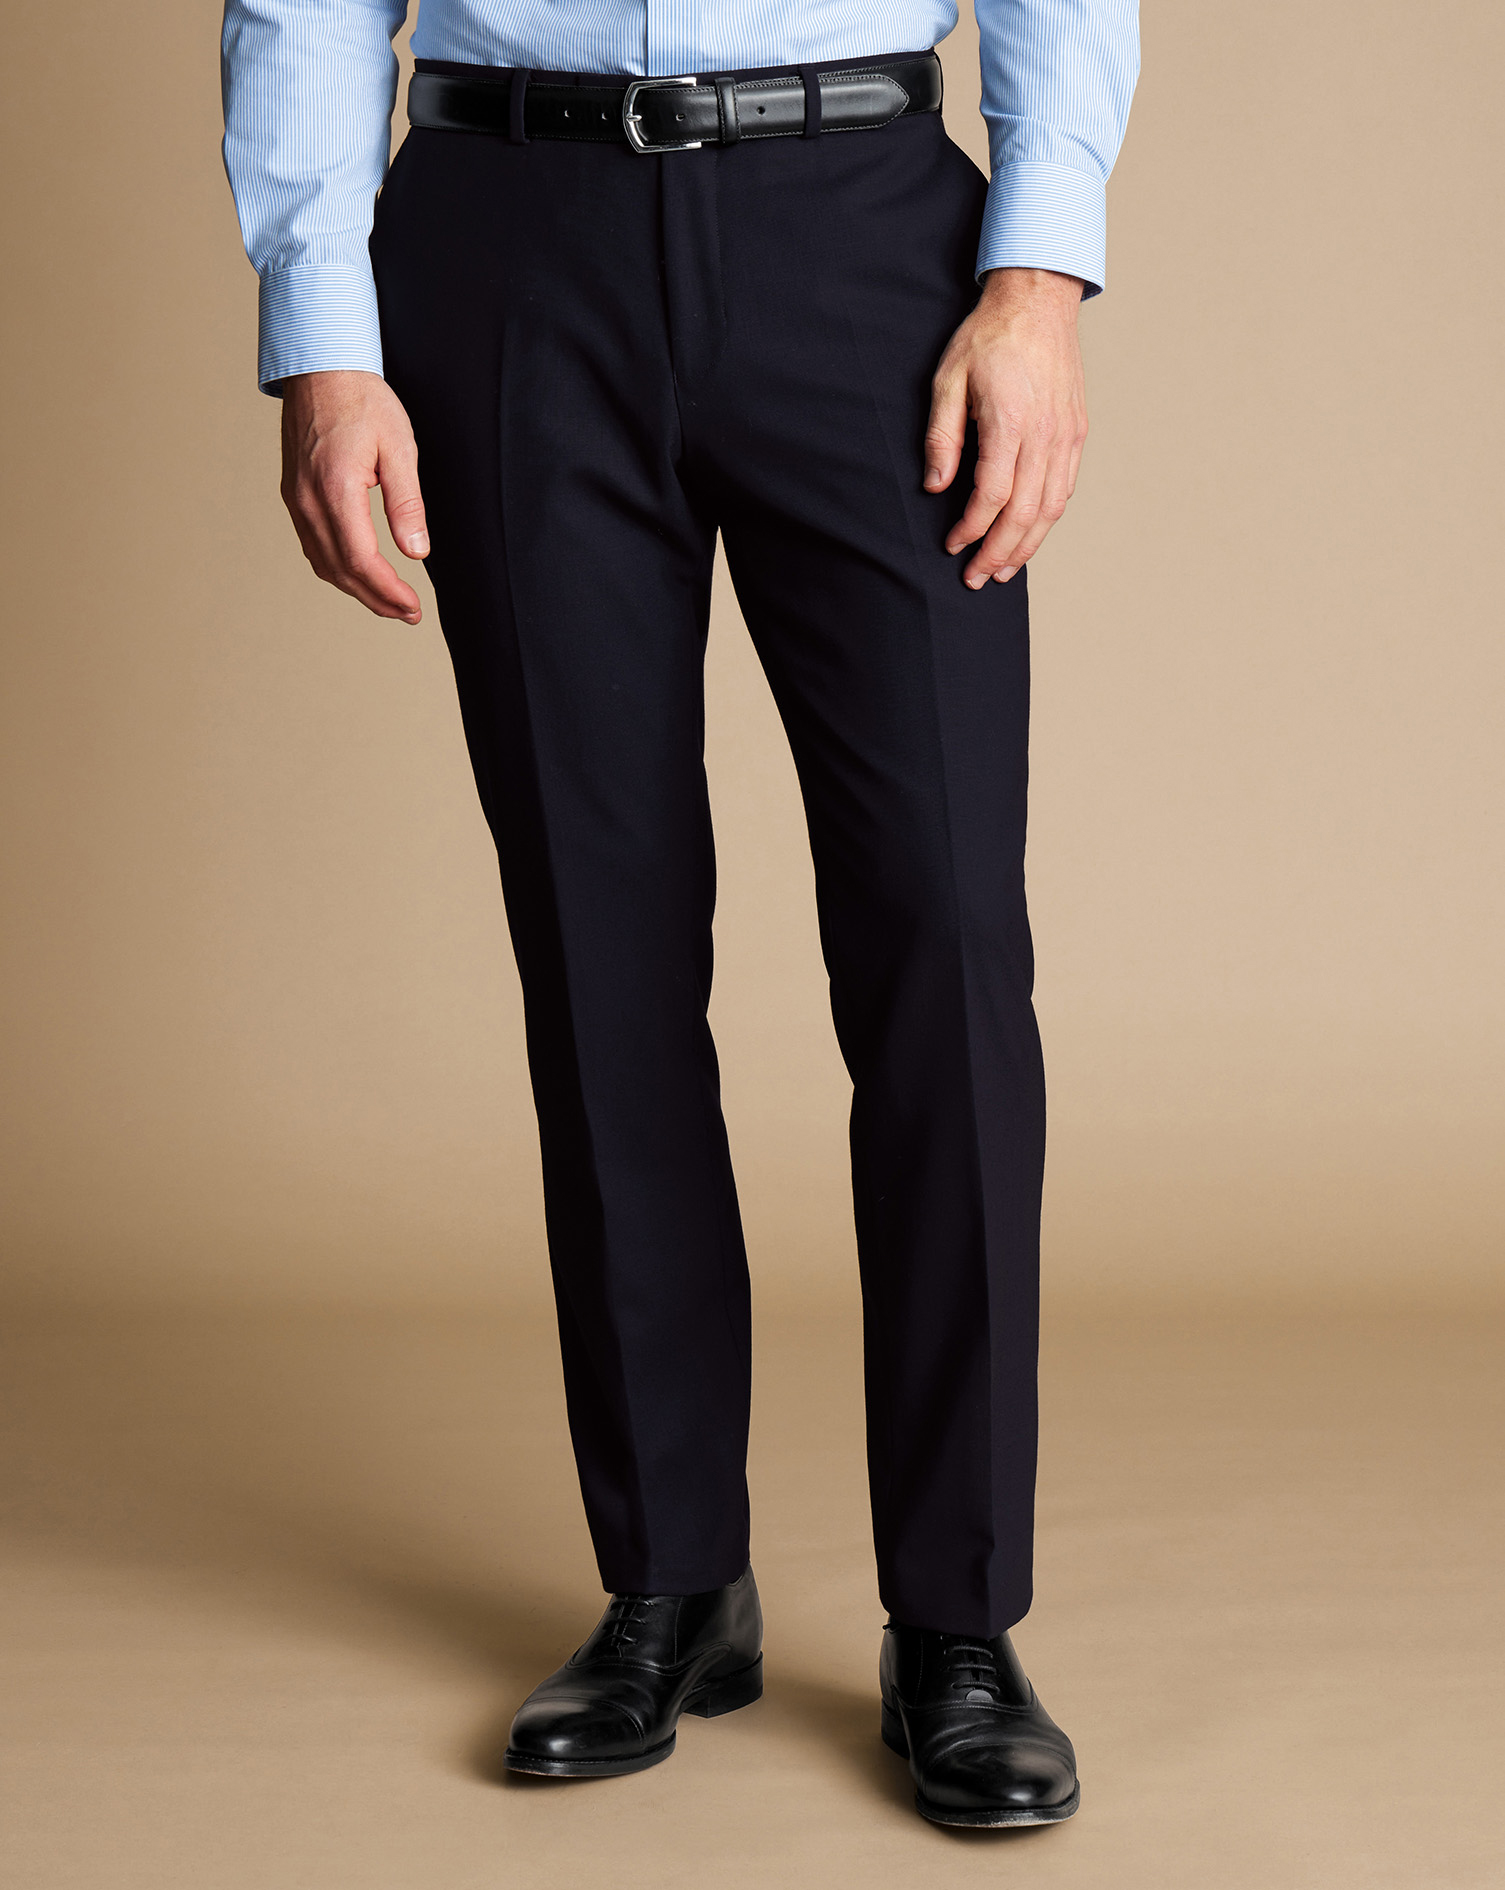 Men's Charles Tyrwhitt Ultimate Performance Suit Trousers - Dark Navy Blue Size 32/30 Wool
